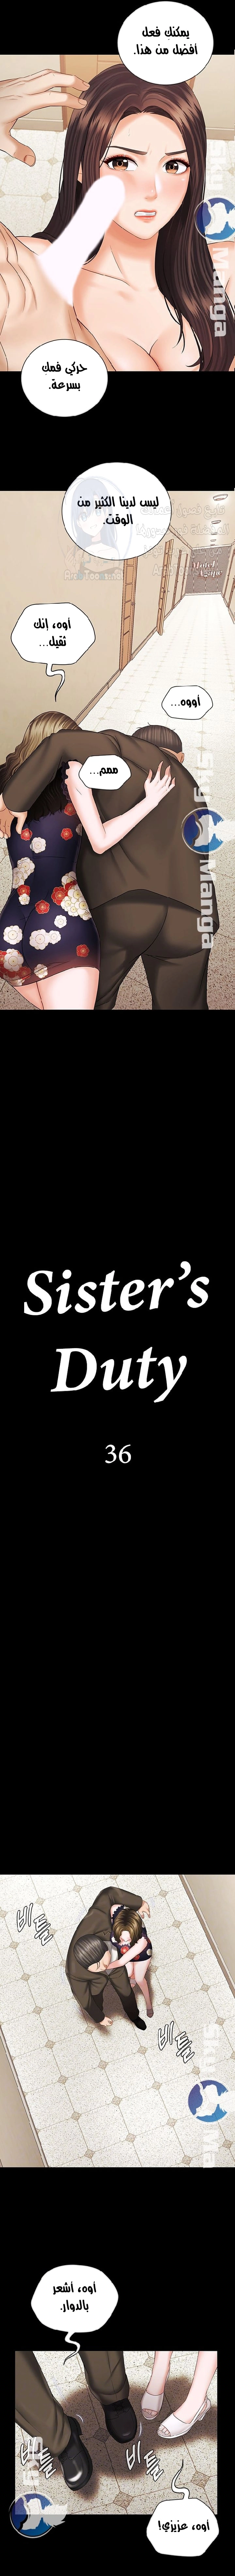 My Sister’s Duty - 36 - 66481a0e8229c.webp